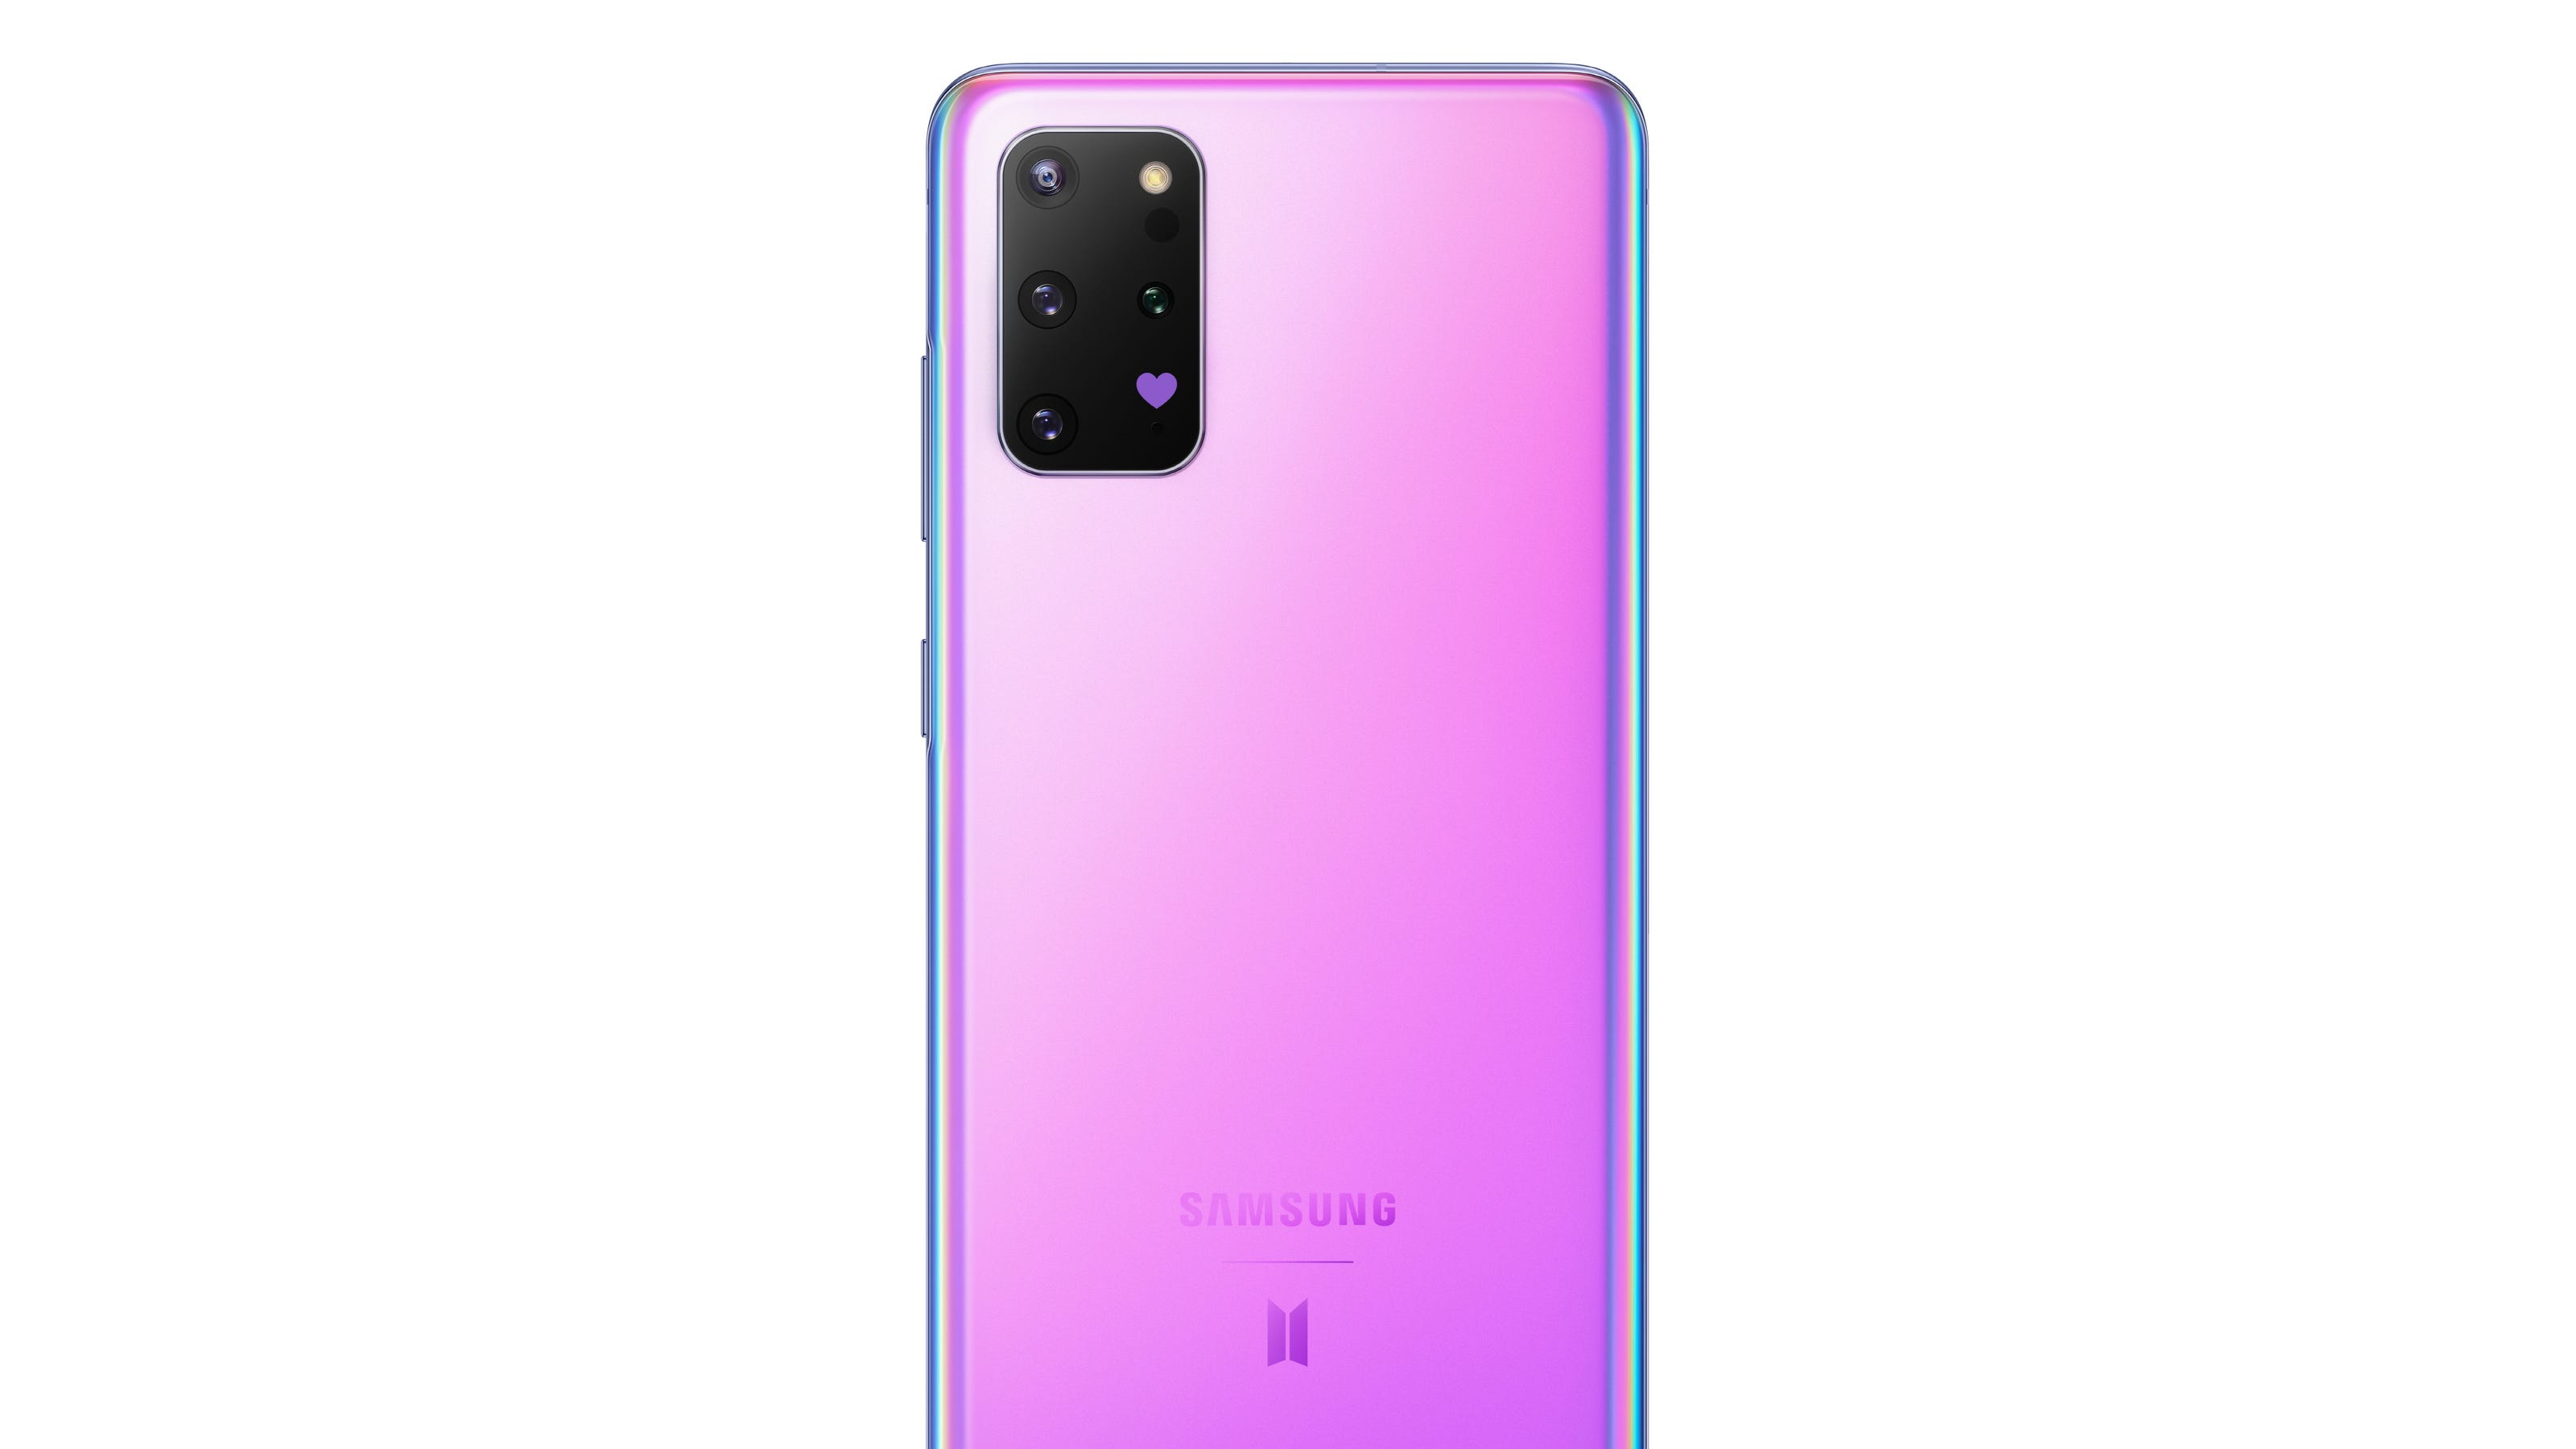 Samsung Galaxy S20 Plus BTS Edition: Boy band inspired purple phone